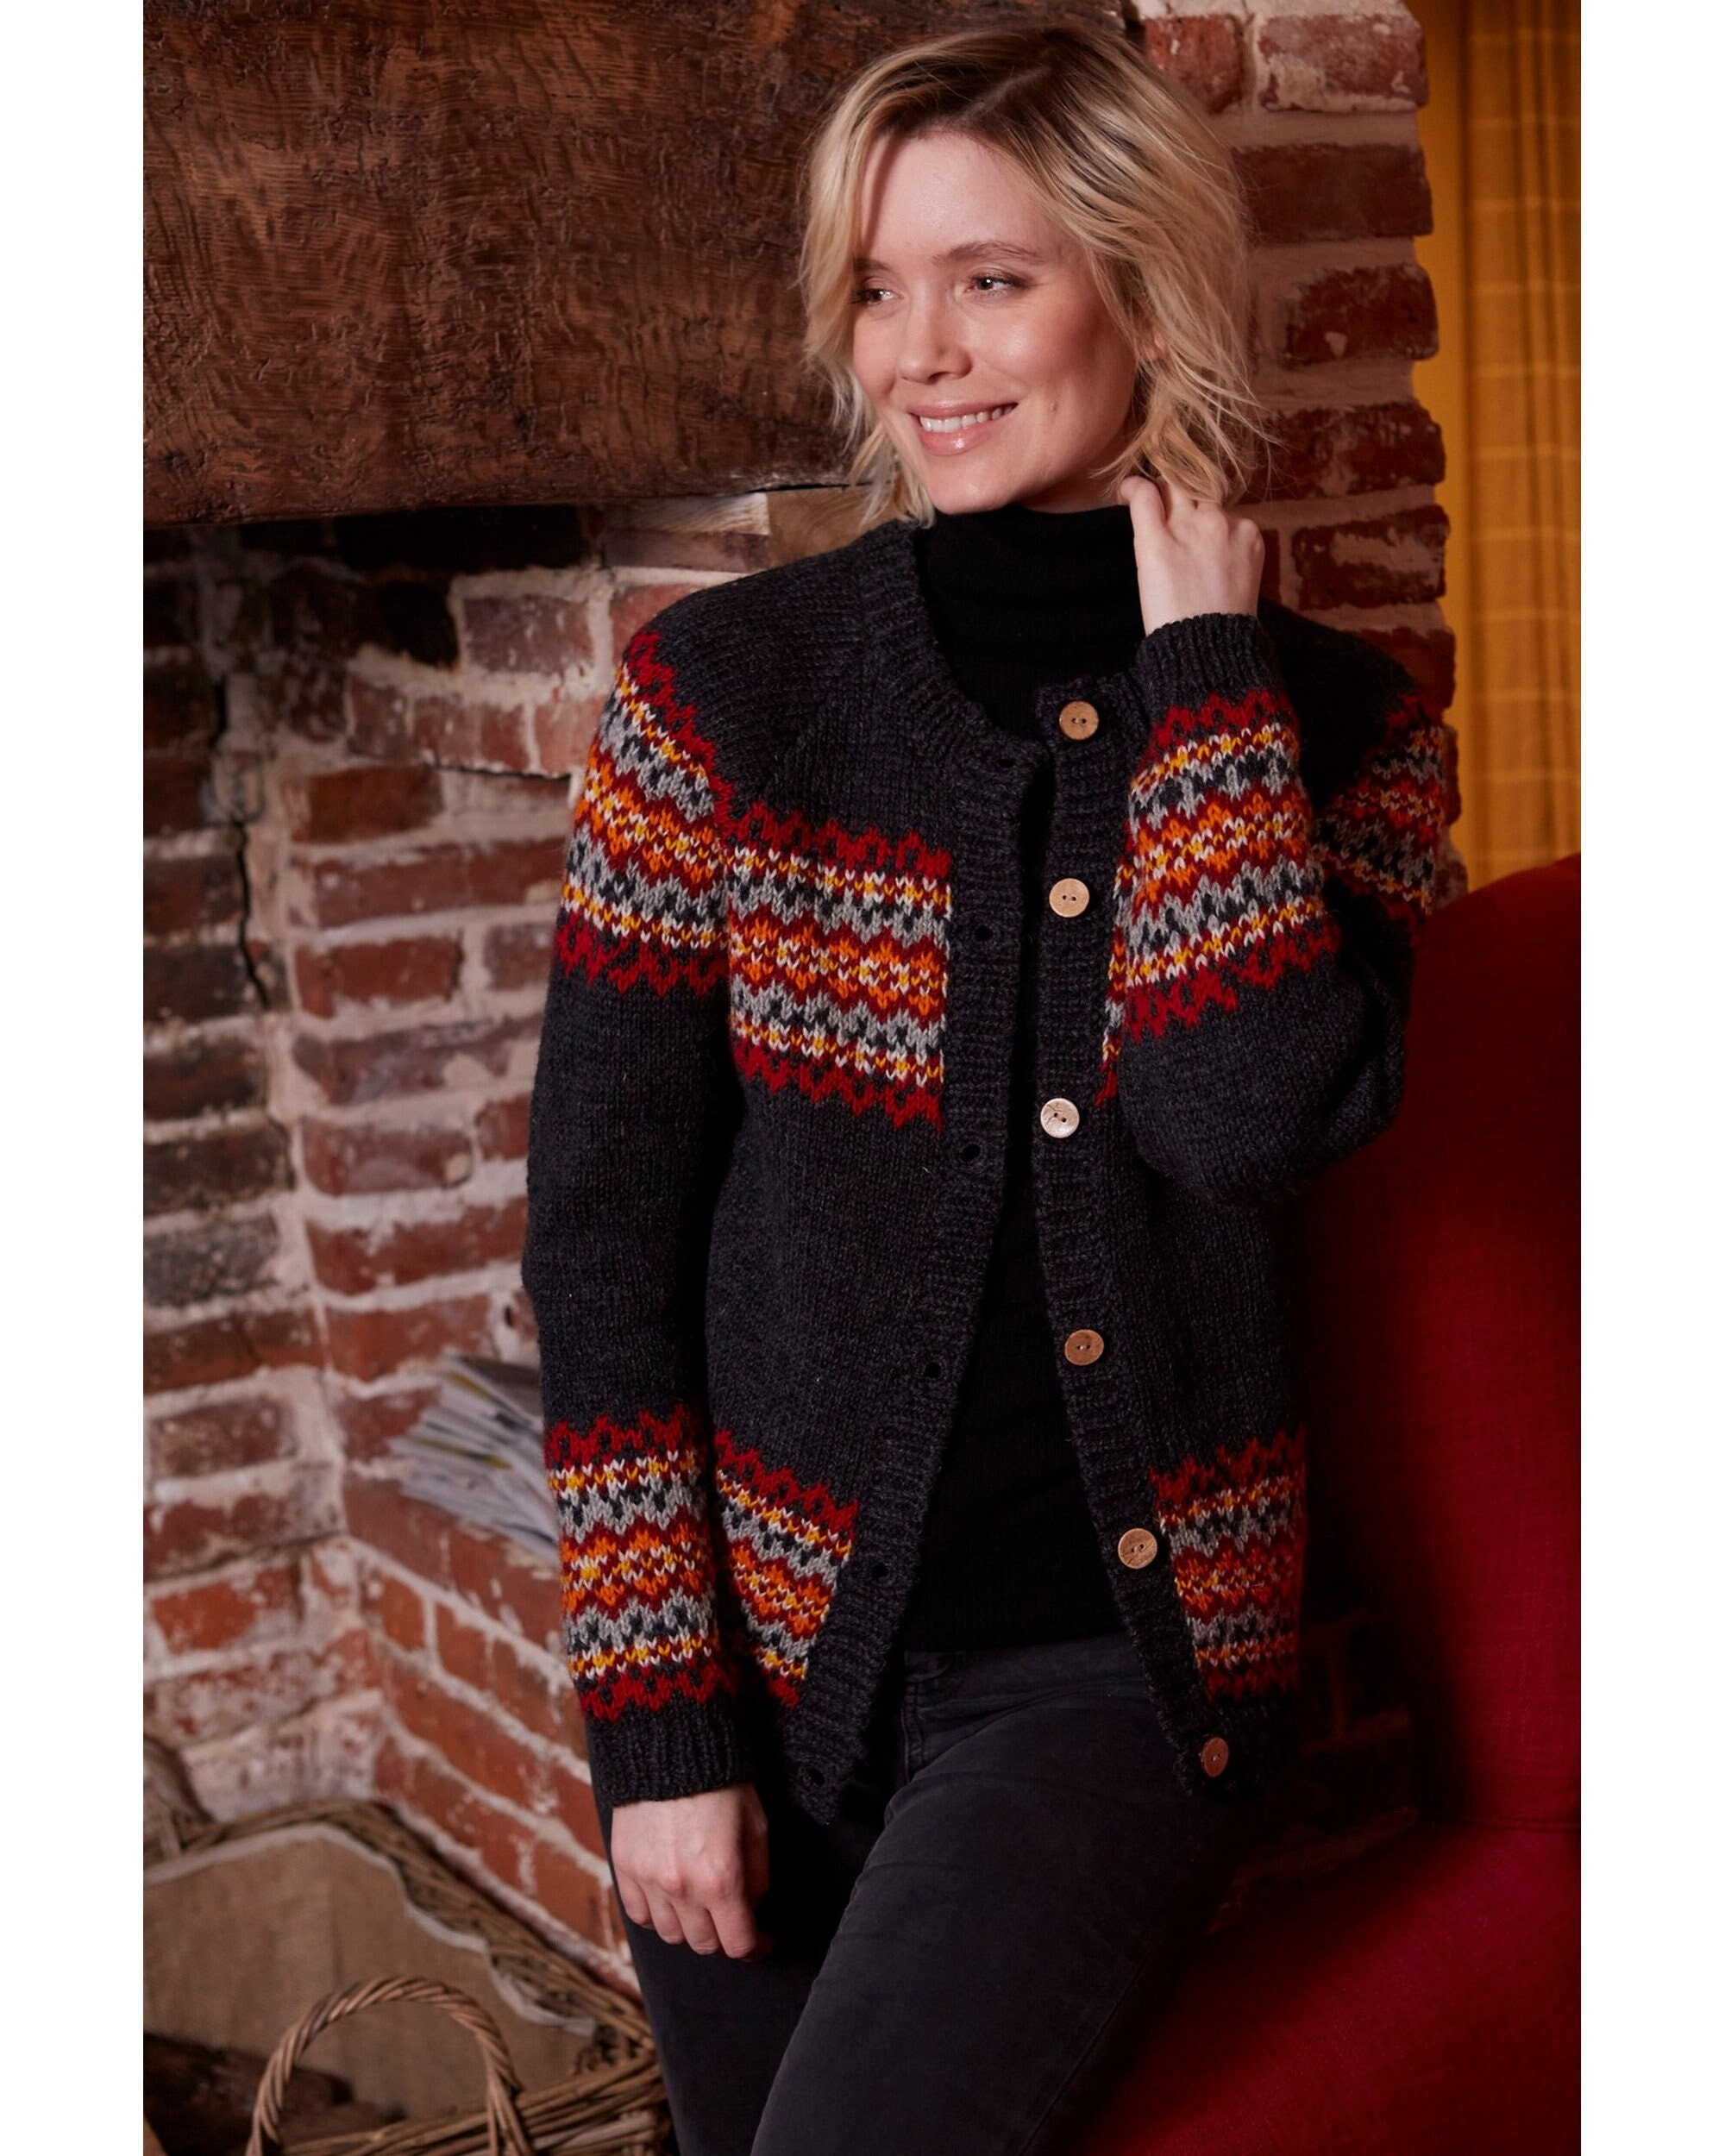 Women's Wool Cardigan 100% Wool Fair Isle Sweater Handknitted Fair Trade  Ethical Clothing Pachamama 